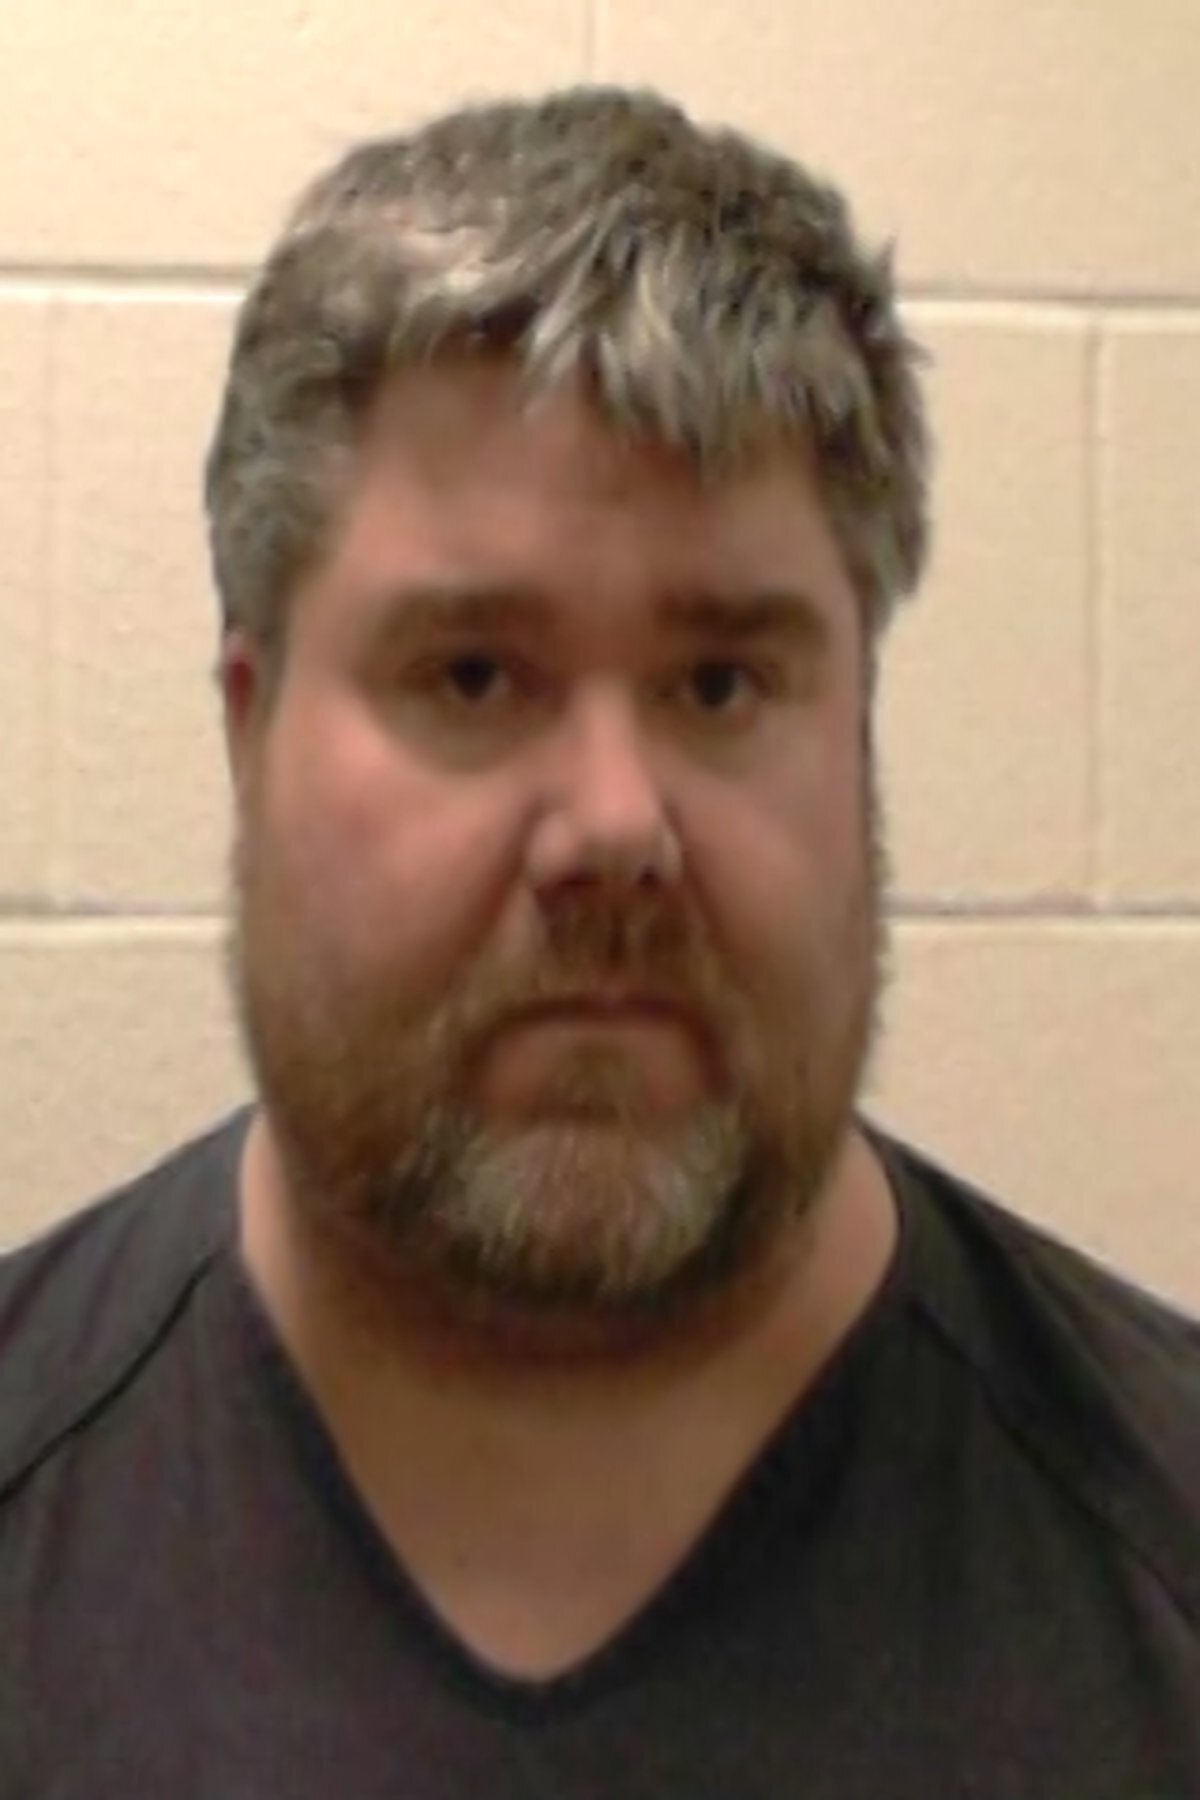 [IMAGE] Steven Downs, of Auburn, convicted in 1993 killing of woman in Alaska